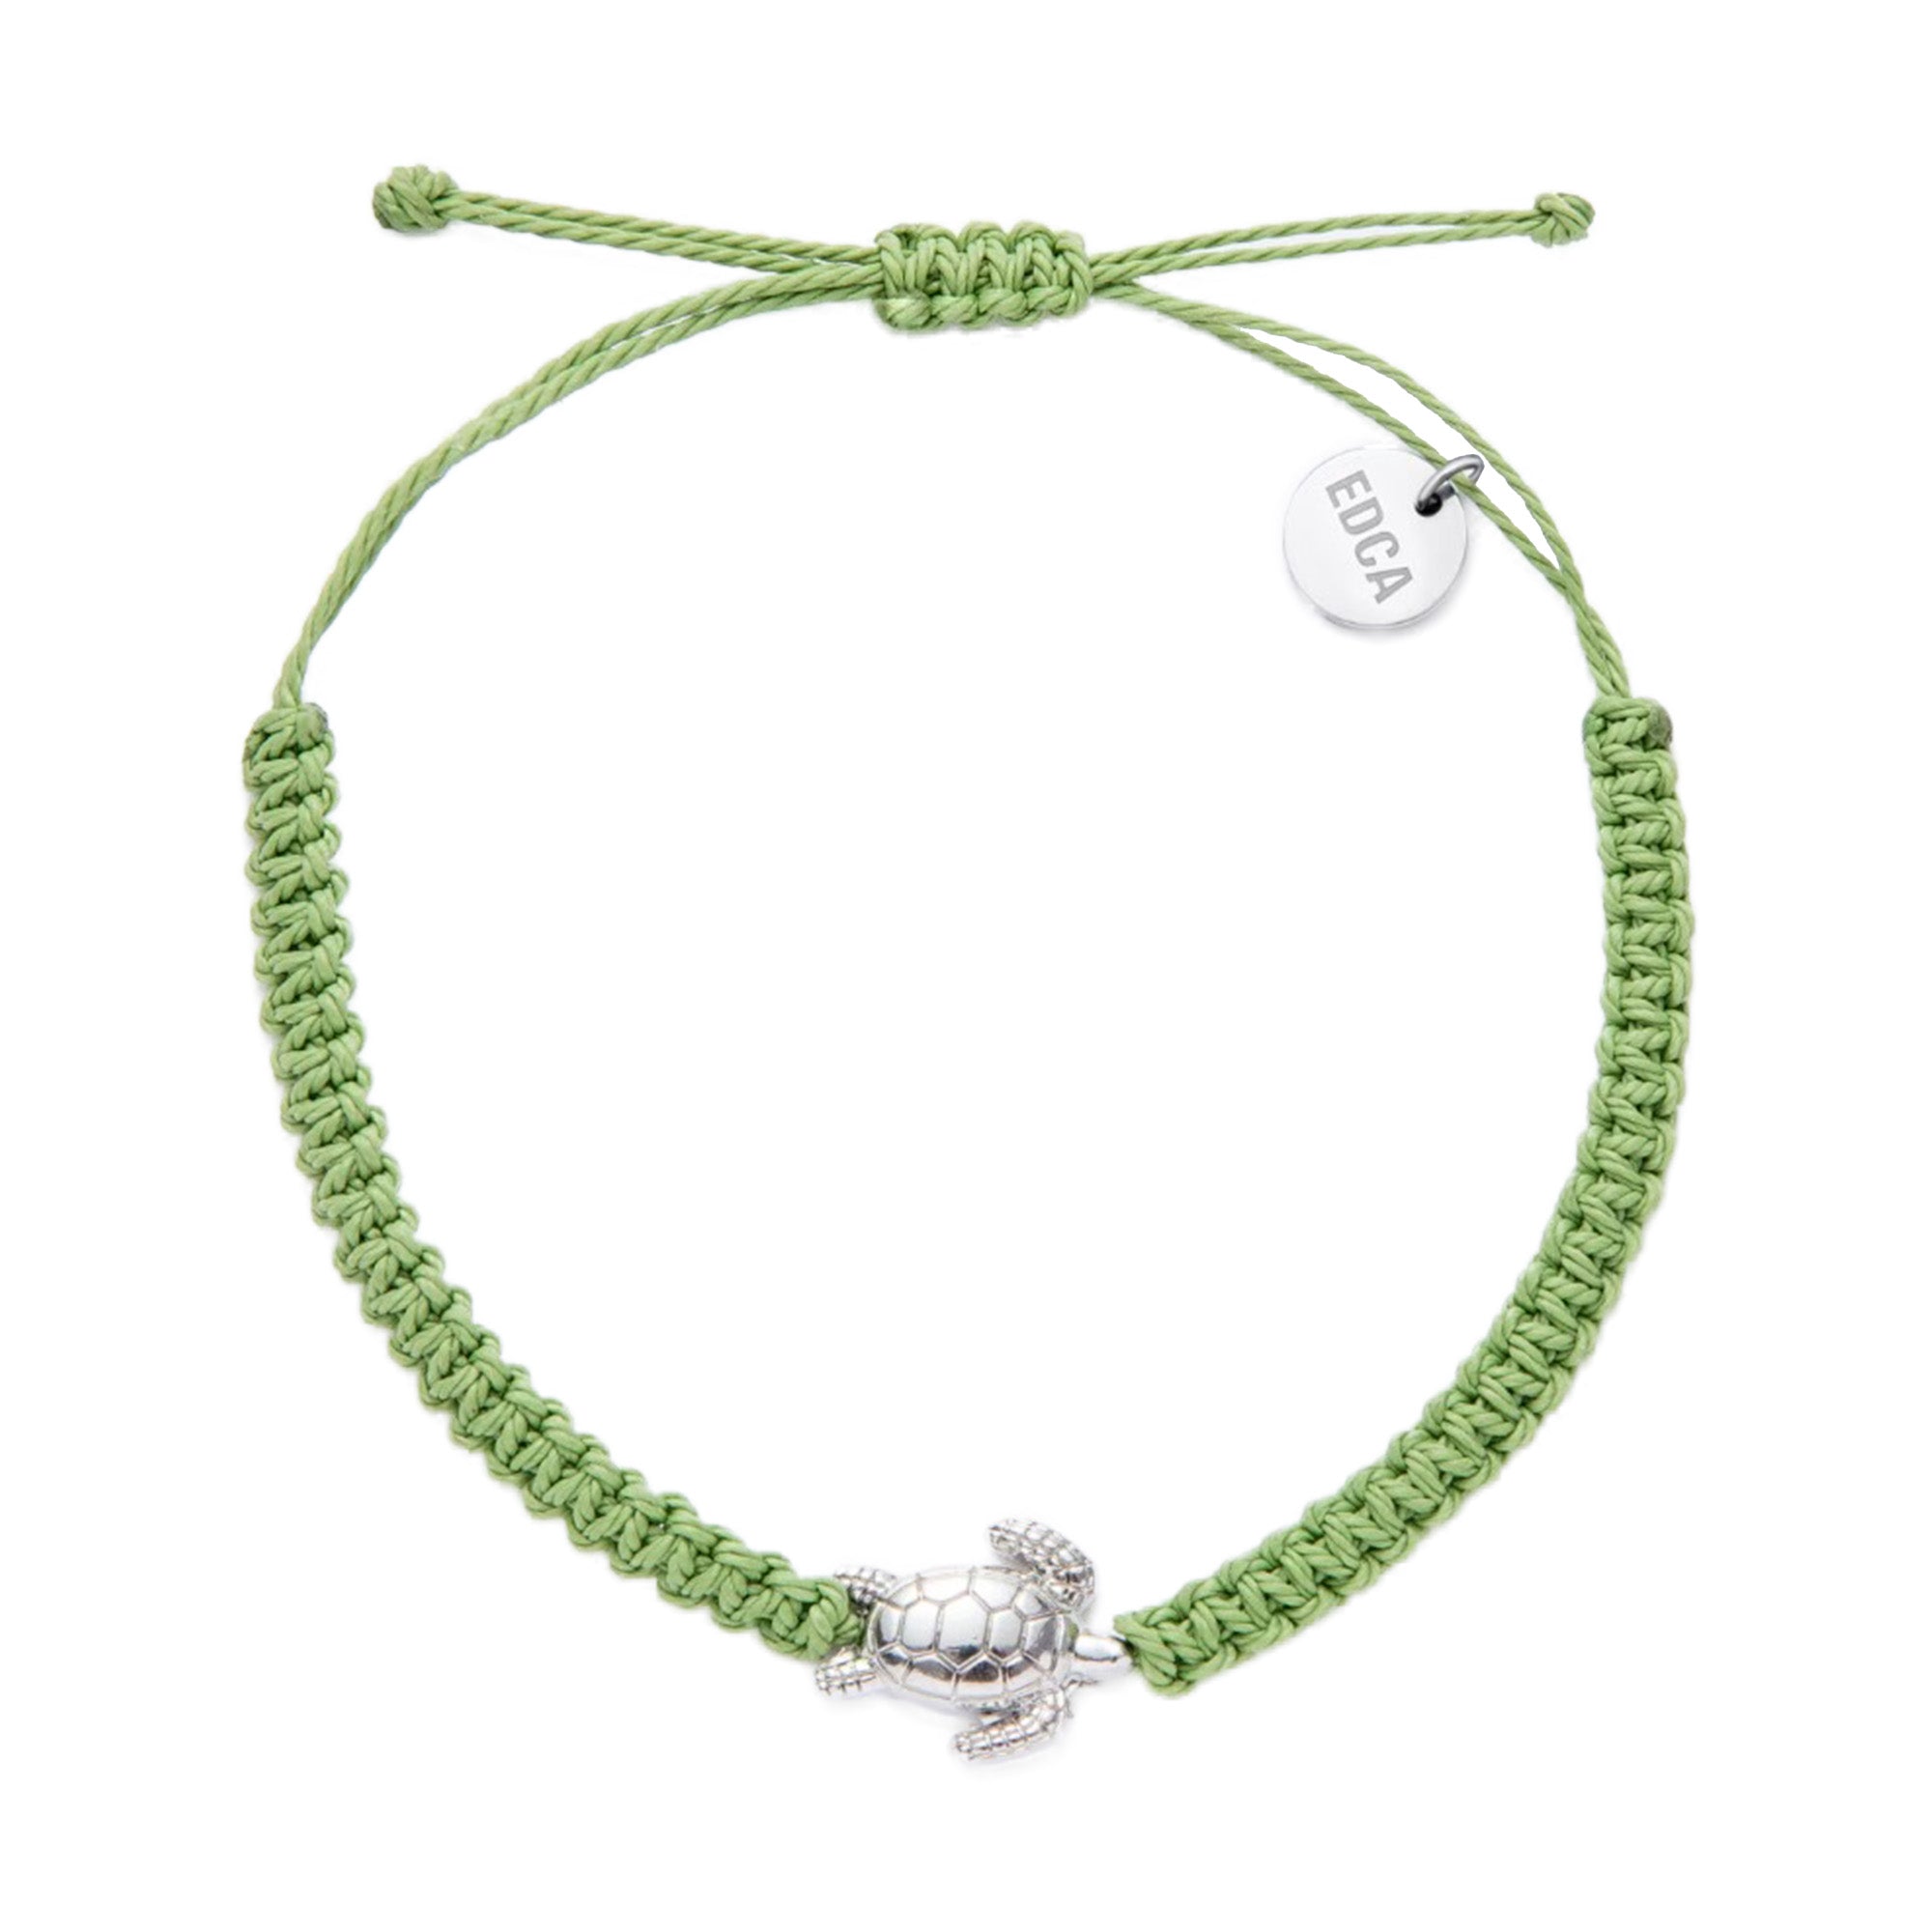 EDCA Mauka Charm Bracelet - green bracelet with turtle charm